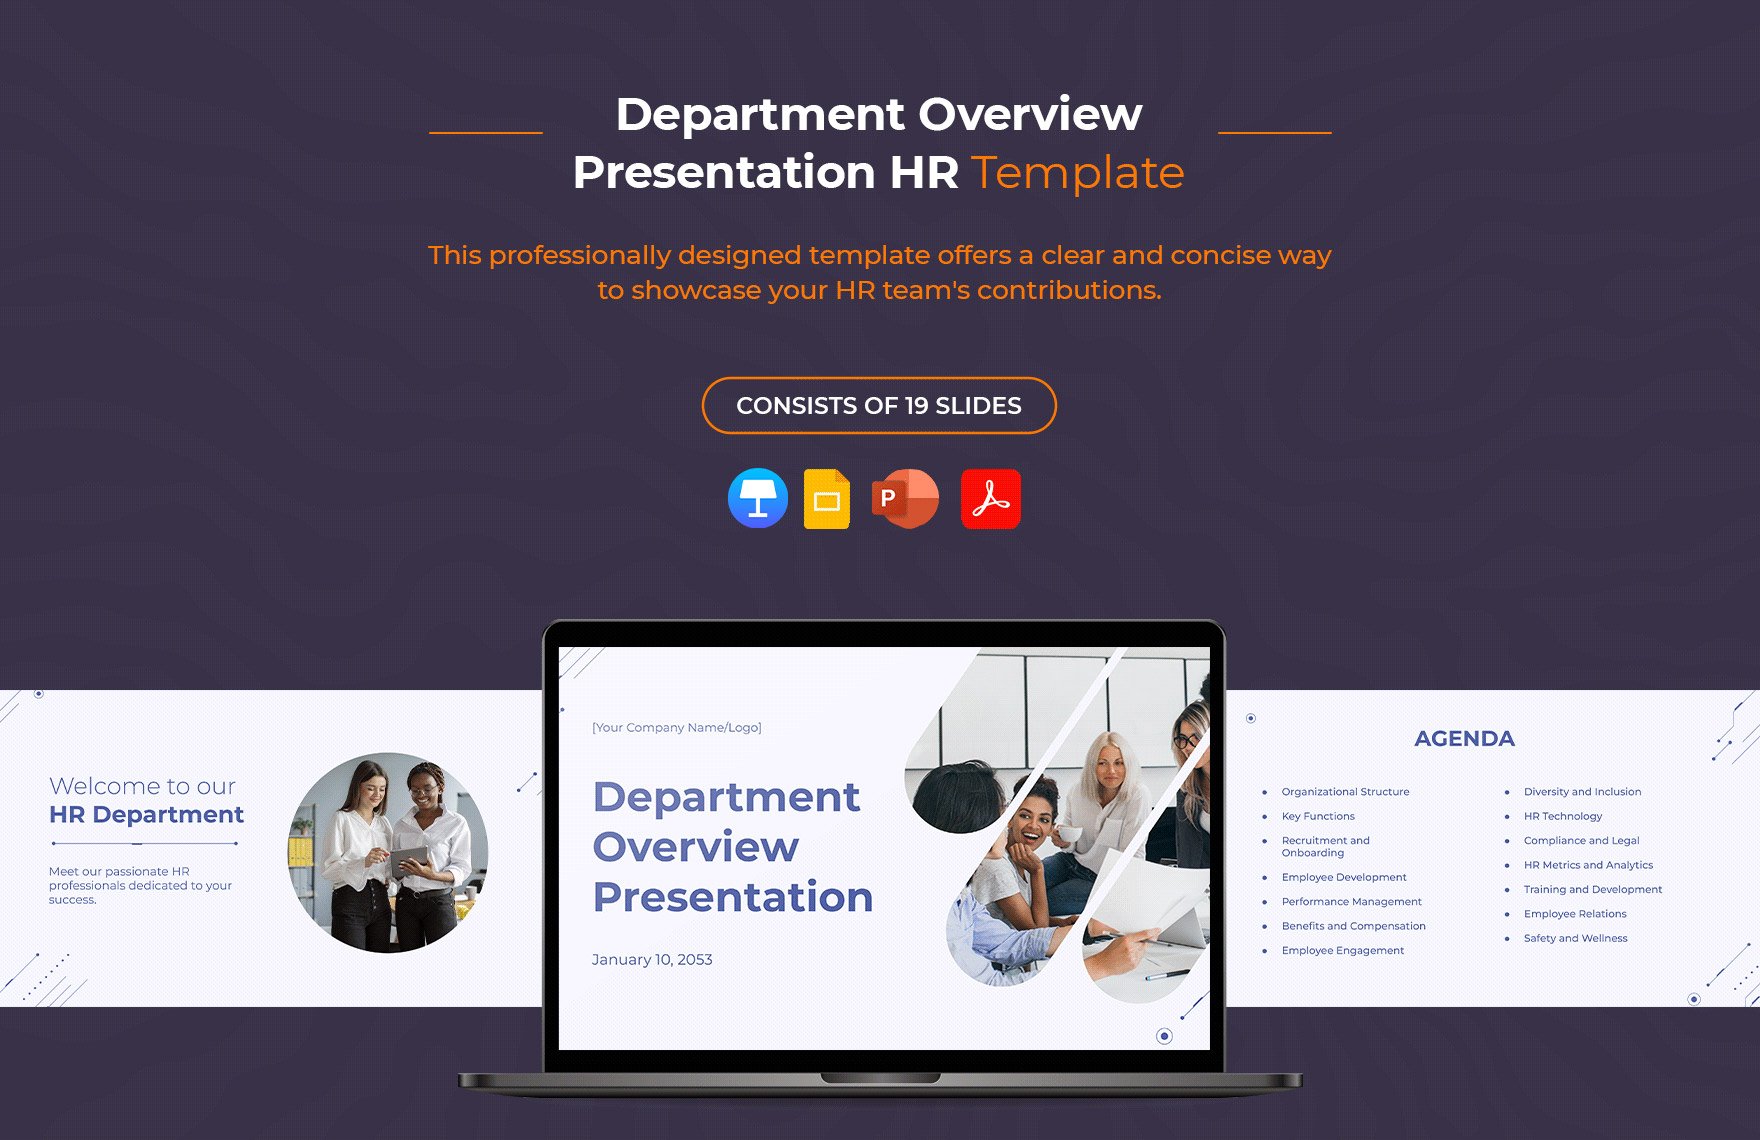 Department Overview Presentation HR Template in PDF, PowerPoint, Google Slides, Apple Keynote